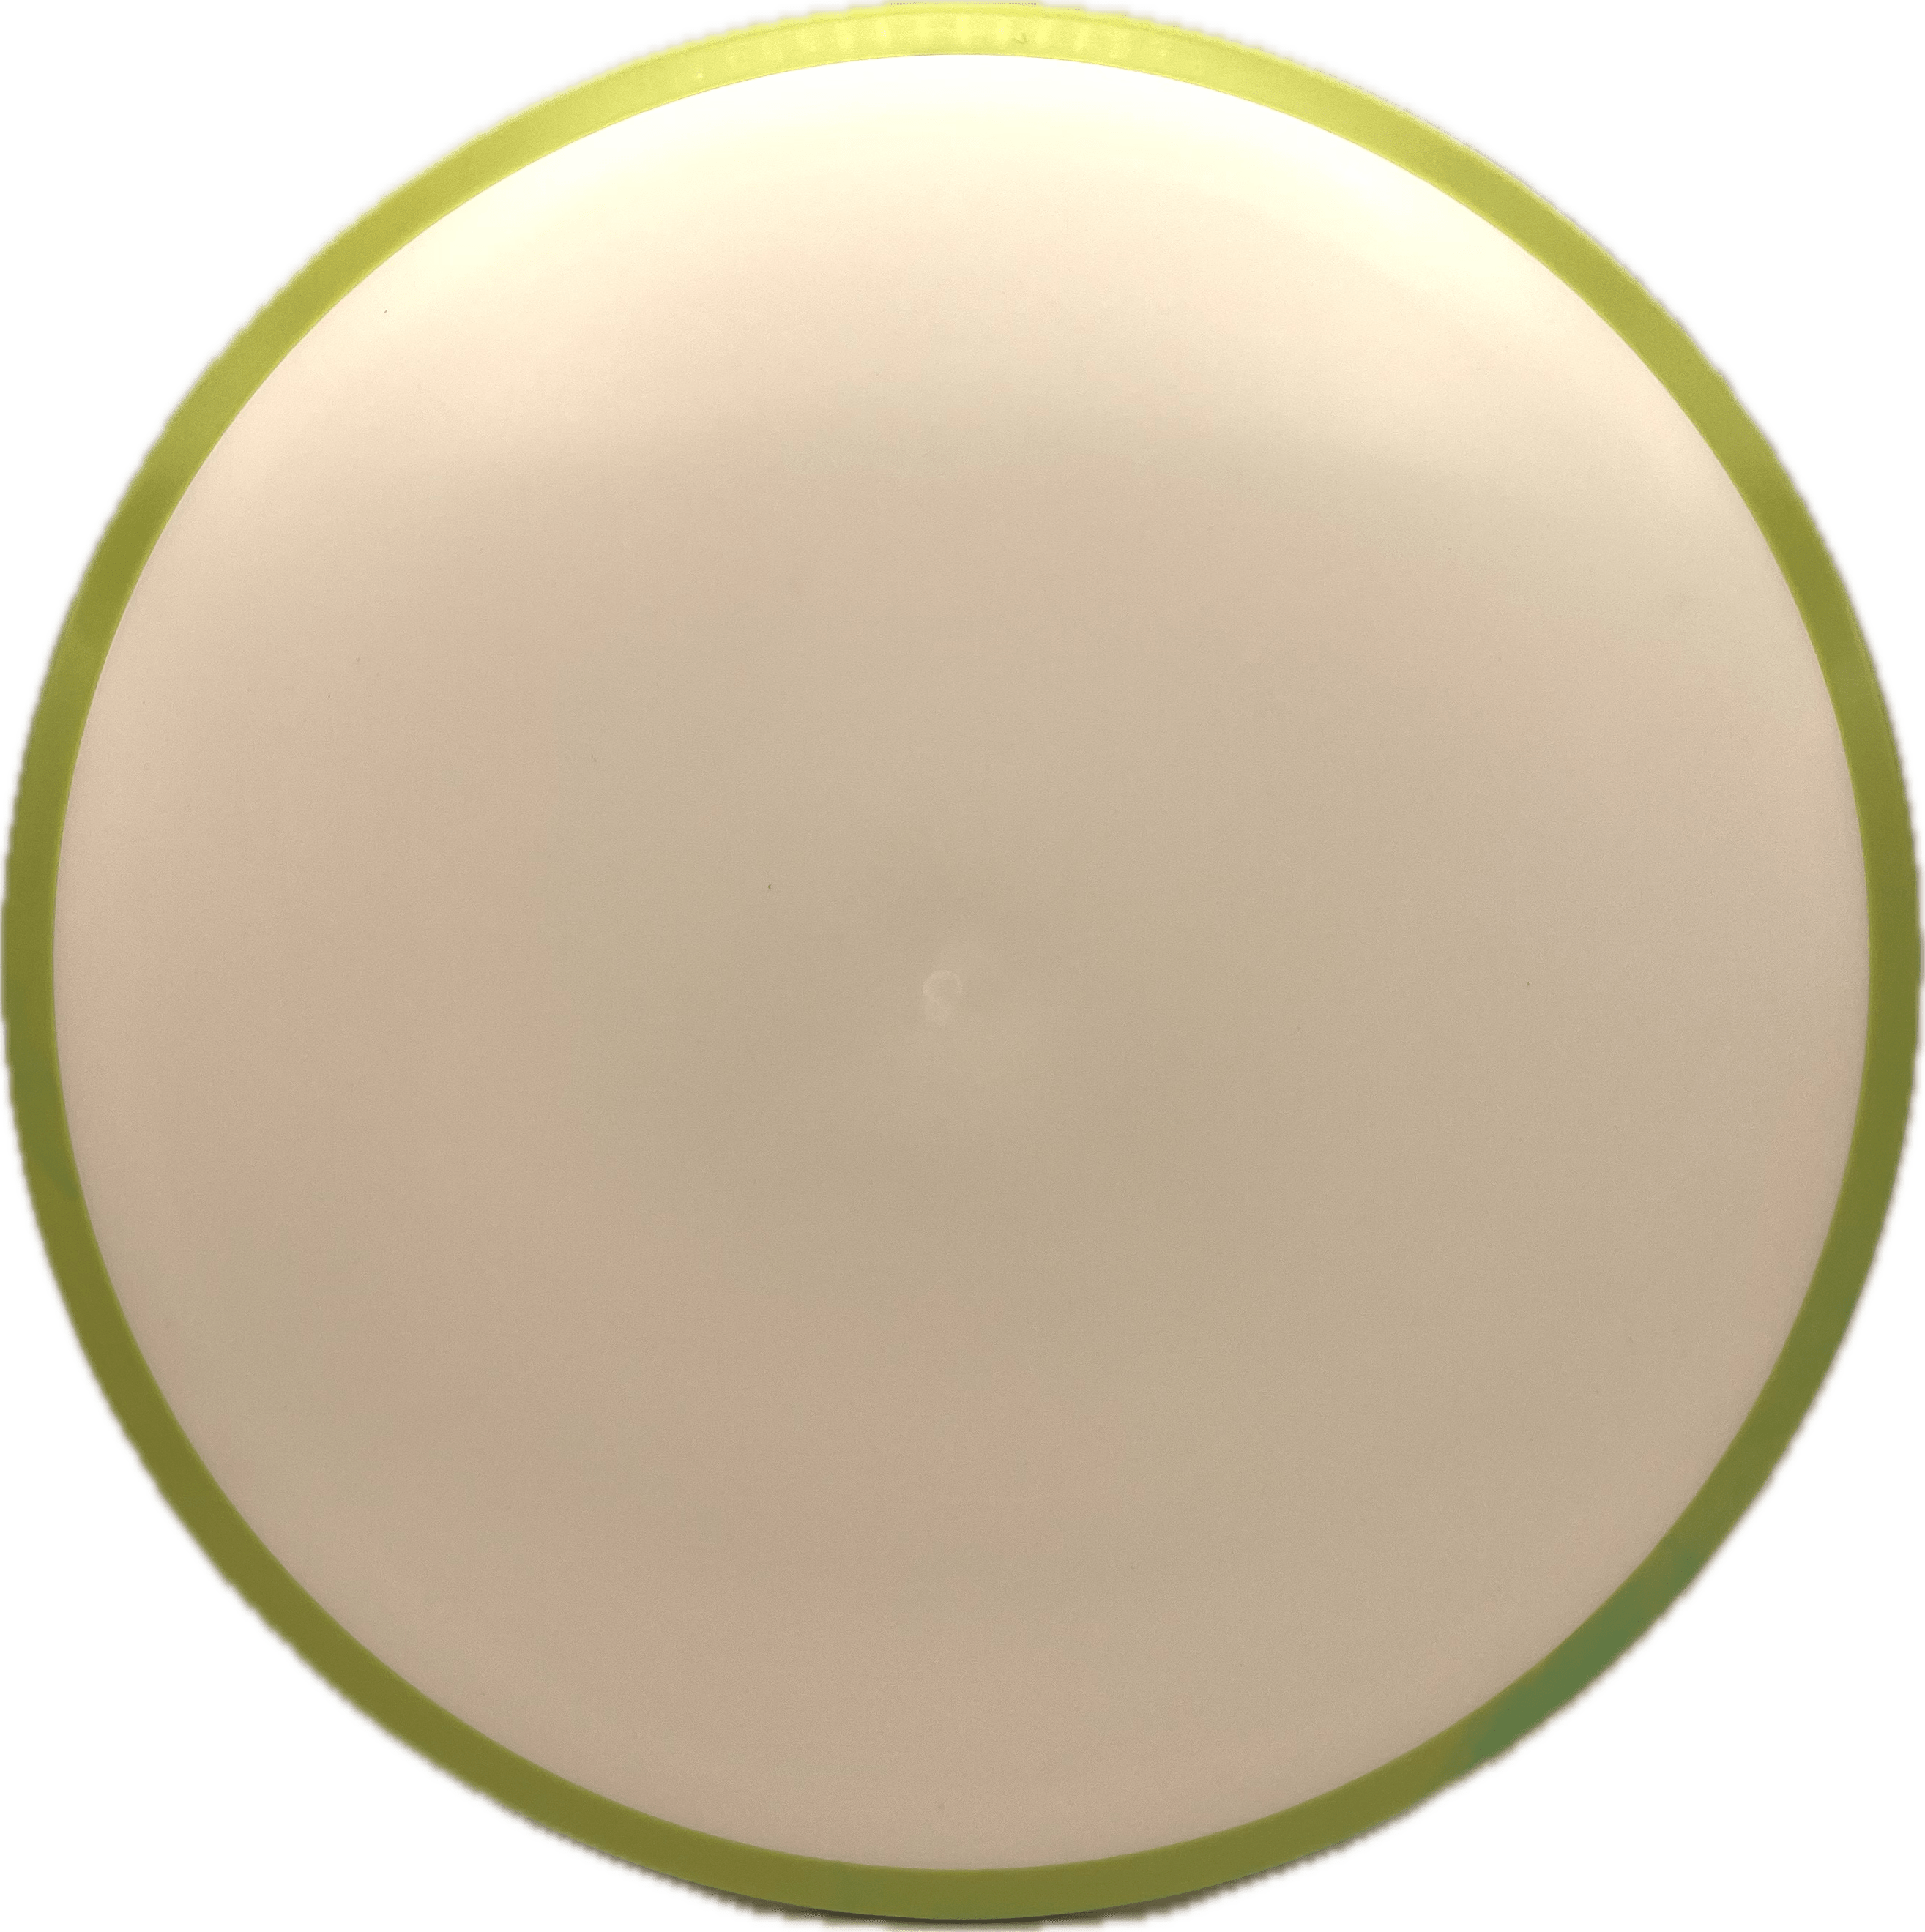 Overthrow Disc Golf Disc Axiom Crave, Fission, 169, White, Bright Green Rim